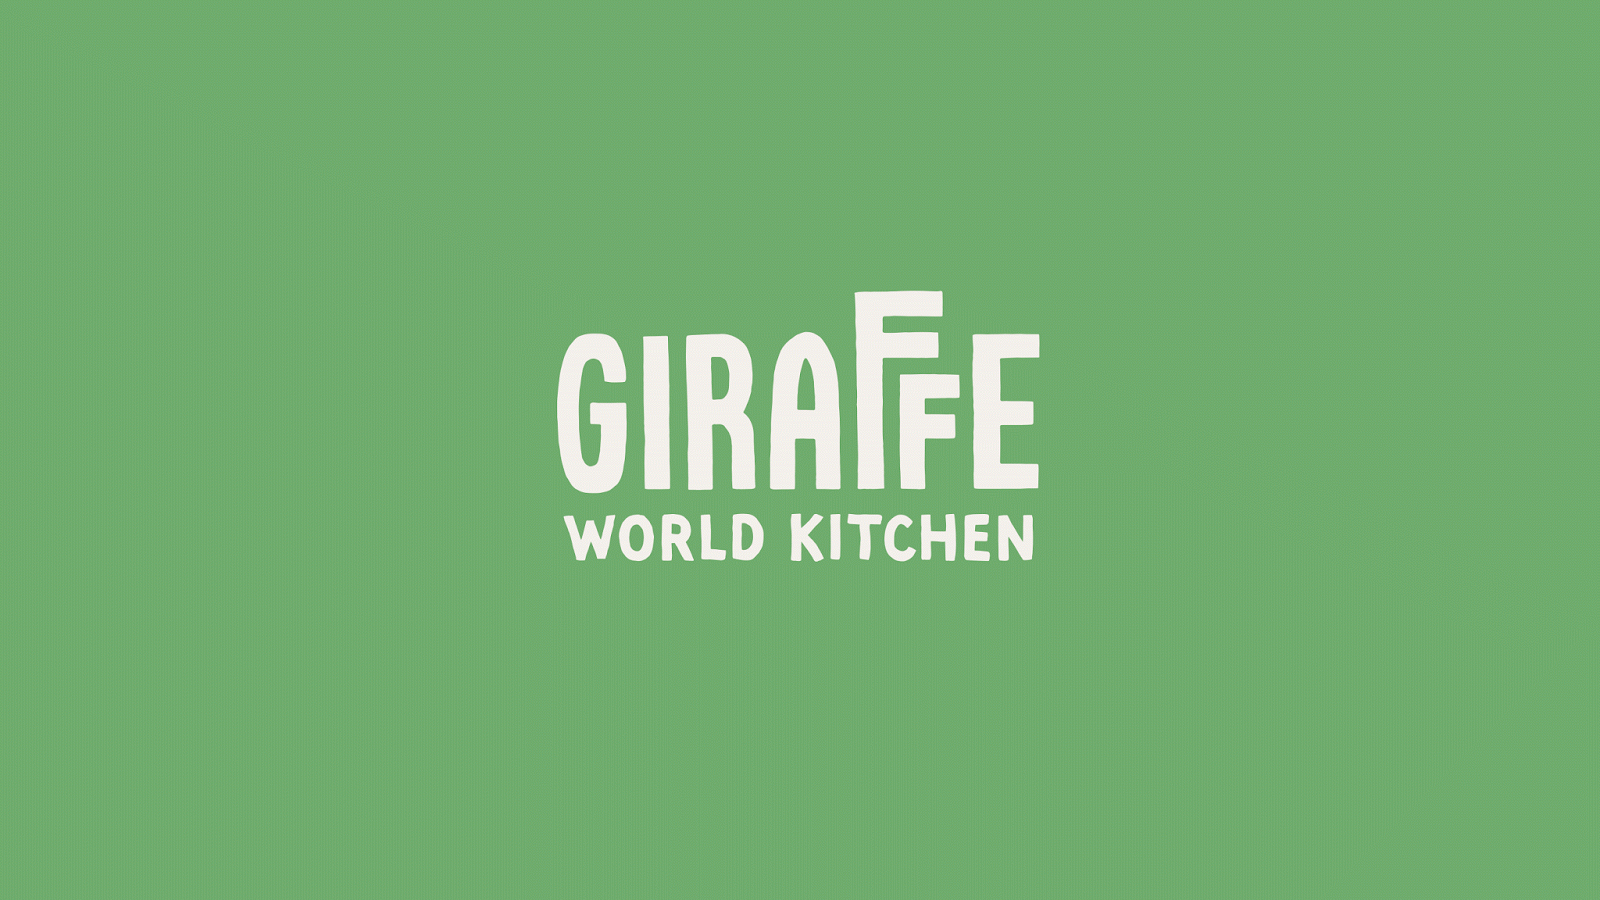 World kitchens. Giraffe World Kitchen. Бренд Creative Kitchen. Логотип кухни. Cuisines of the World logo.